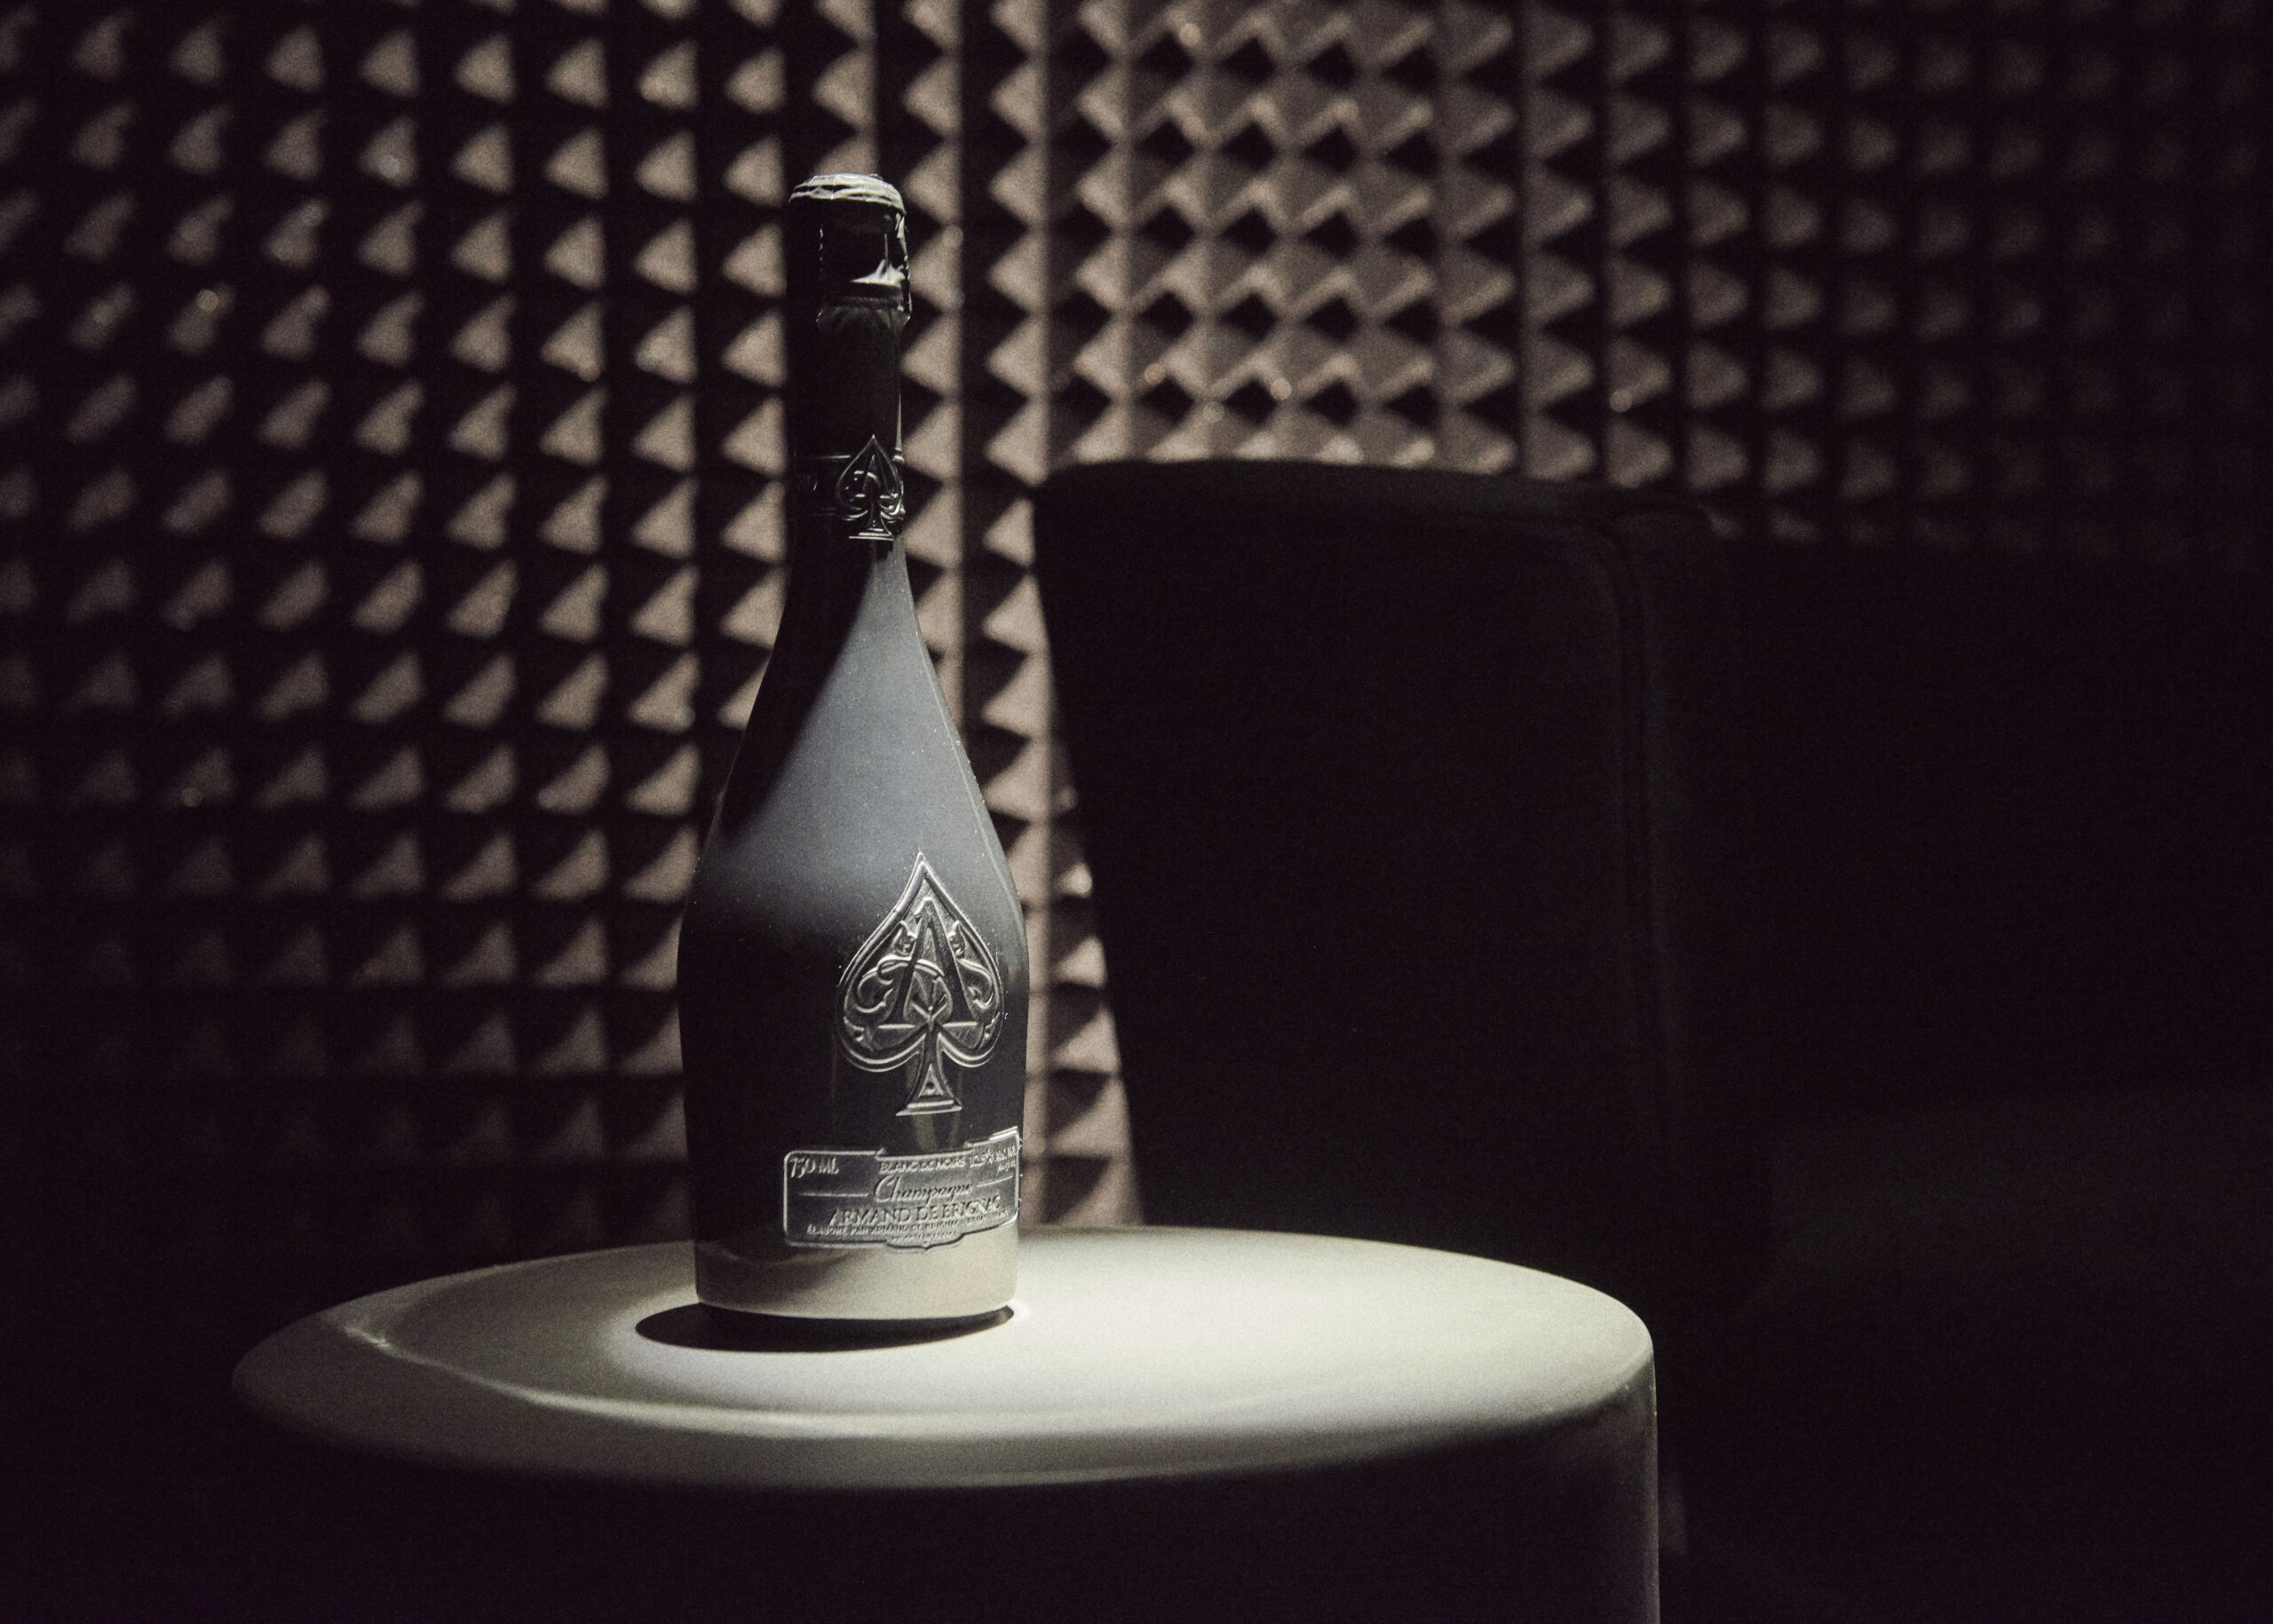 Jay Z buys Armand de Brignac Champagne brand - Los Angeles Times